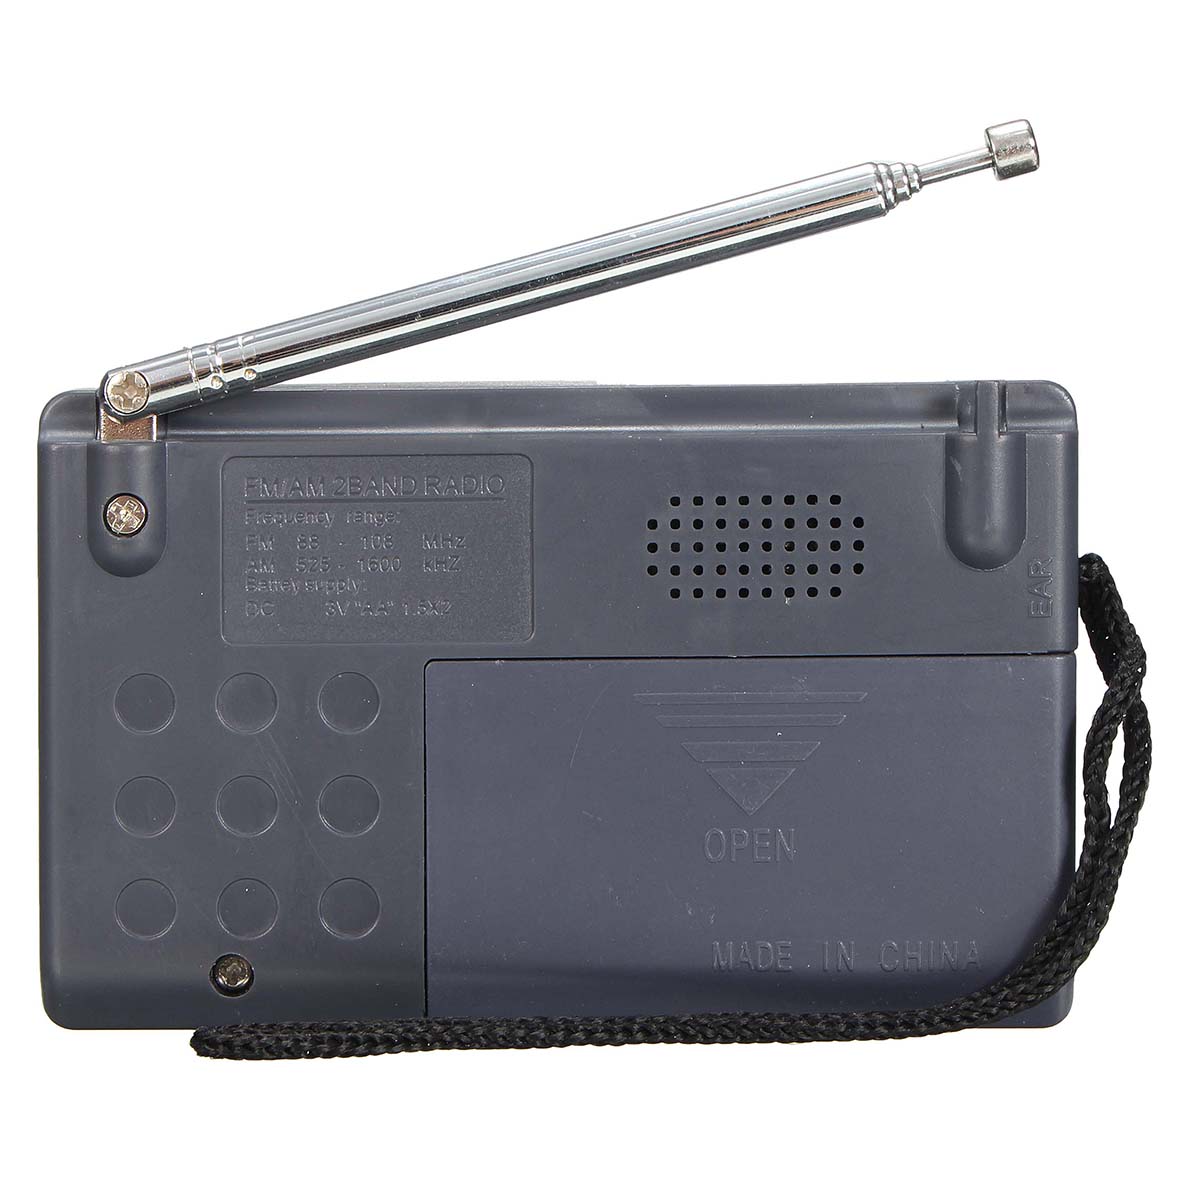 INDIN-BC-R119-AMFM-Portable-Pocket-Radio-Receiver-Telescopic-Antenna-World-Receiver-35mm-1152701